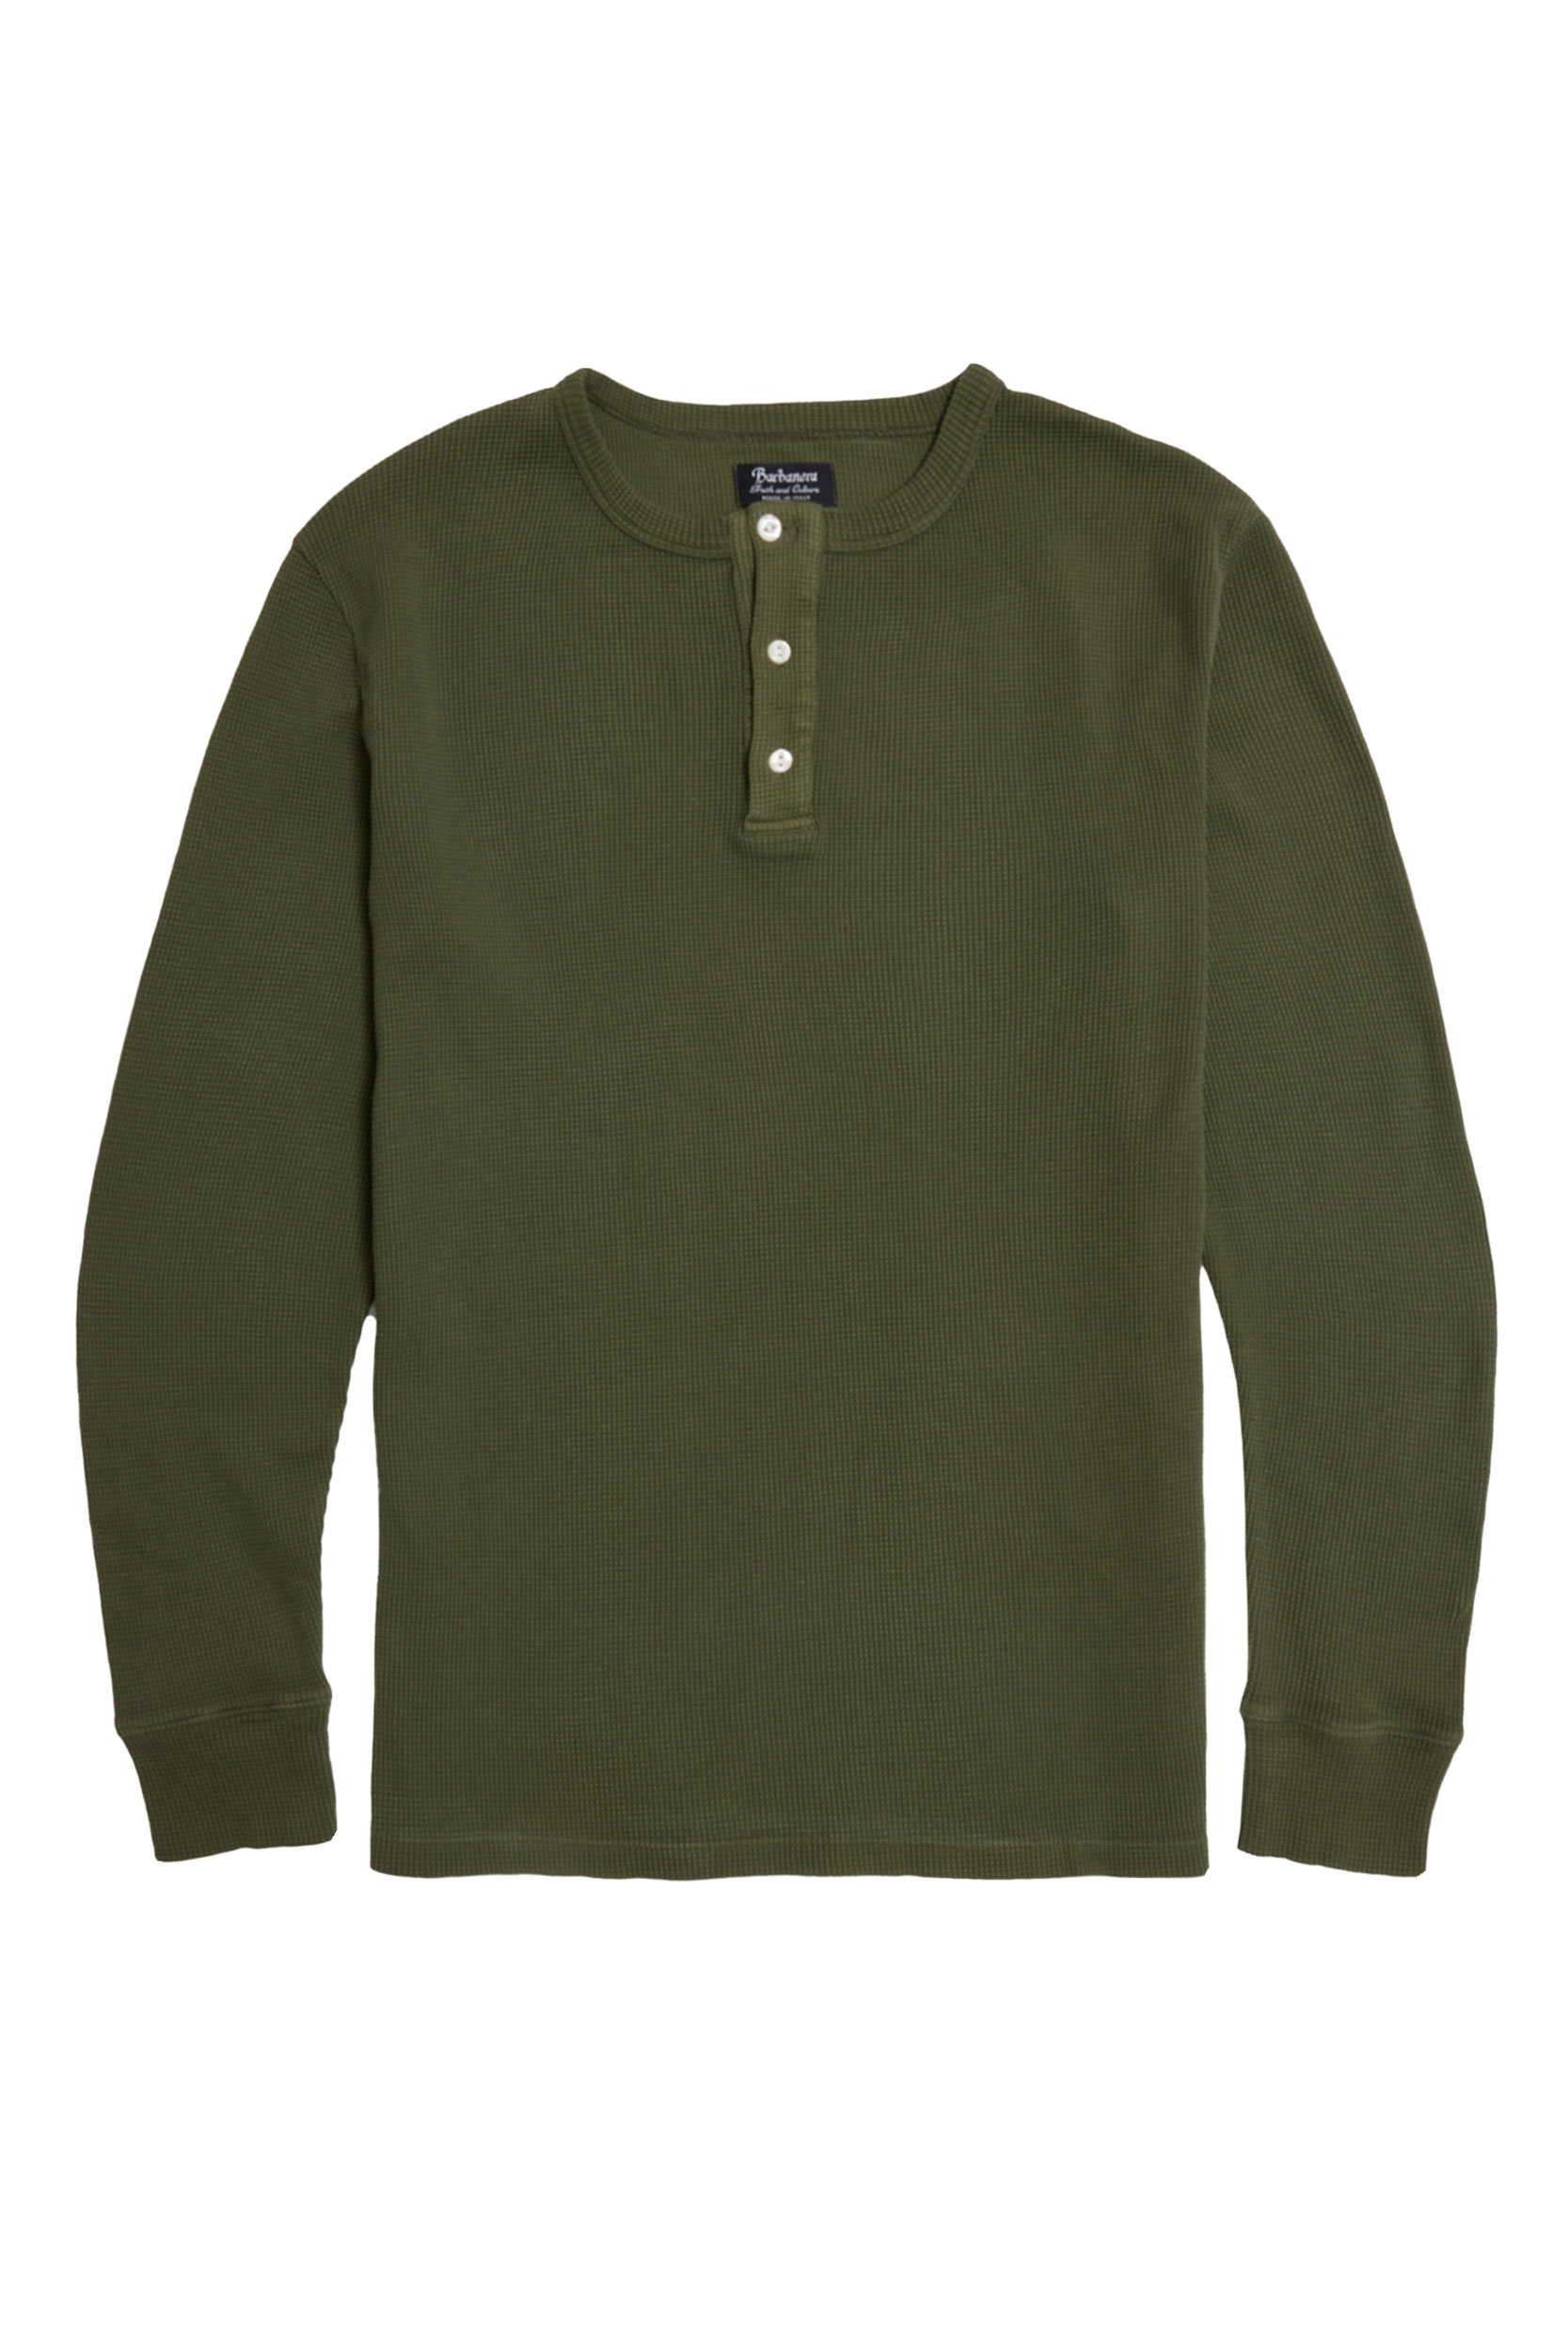 https://www.barbanerastyle.com/wp-content/uploads/2023/05/barbanera-tuco-green-waffle-knit-cotton-henley-shirt-1.jpg